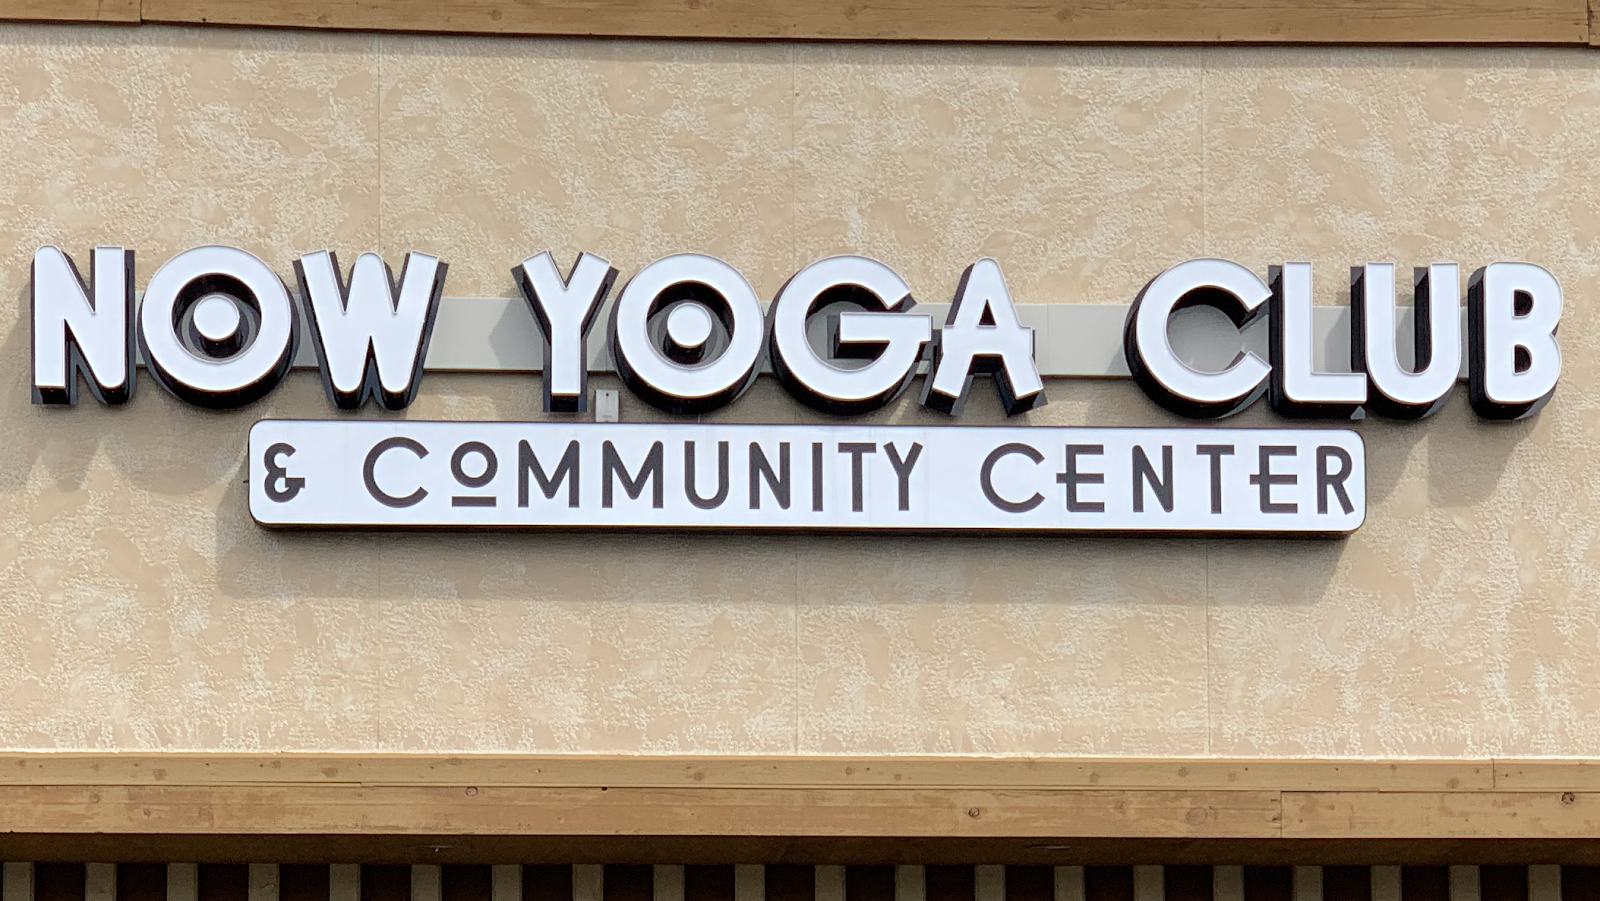 Now Yoga Club